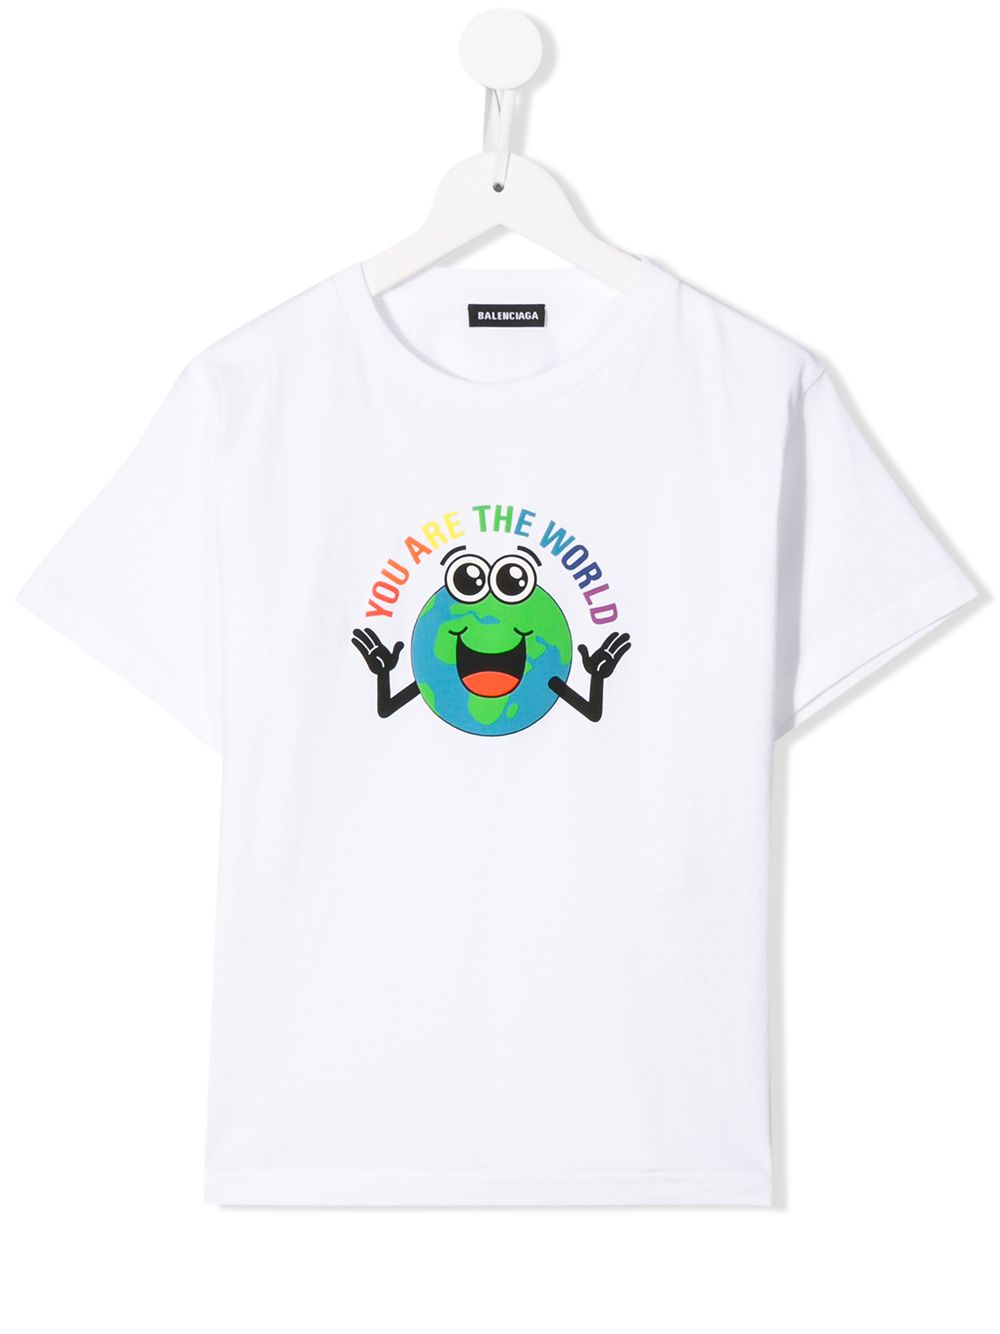 Balenciaga Kids "You Are the World" T-shirt - White